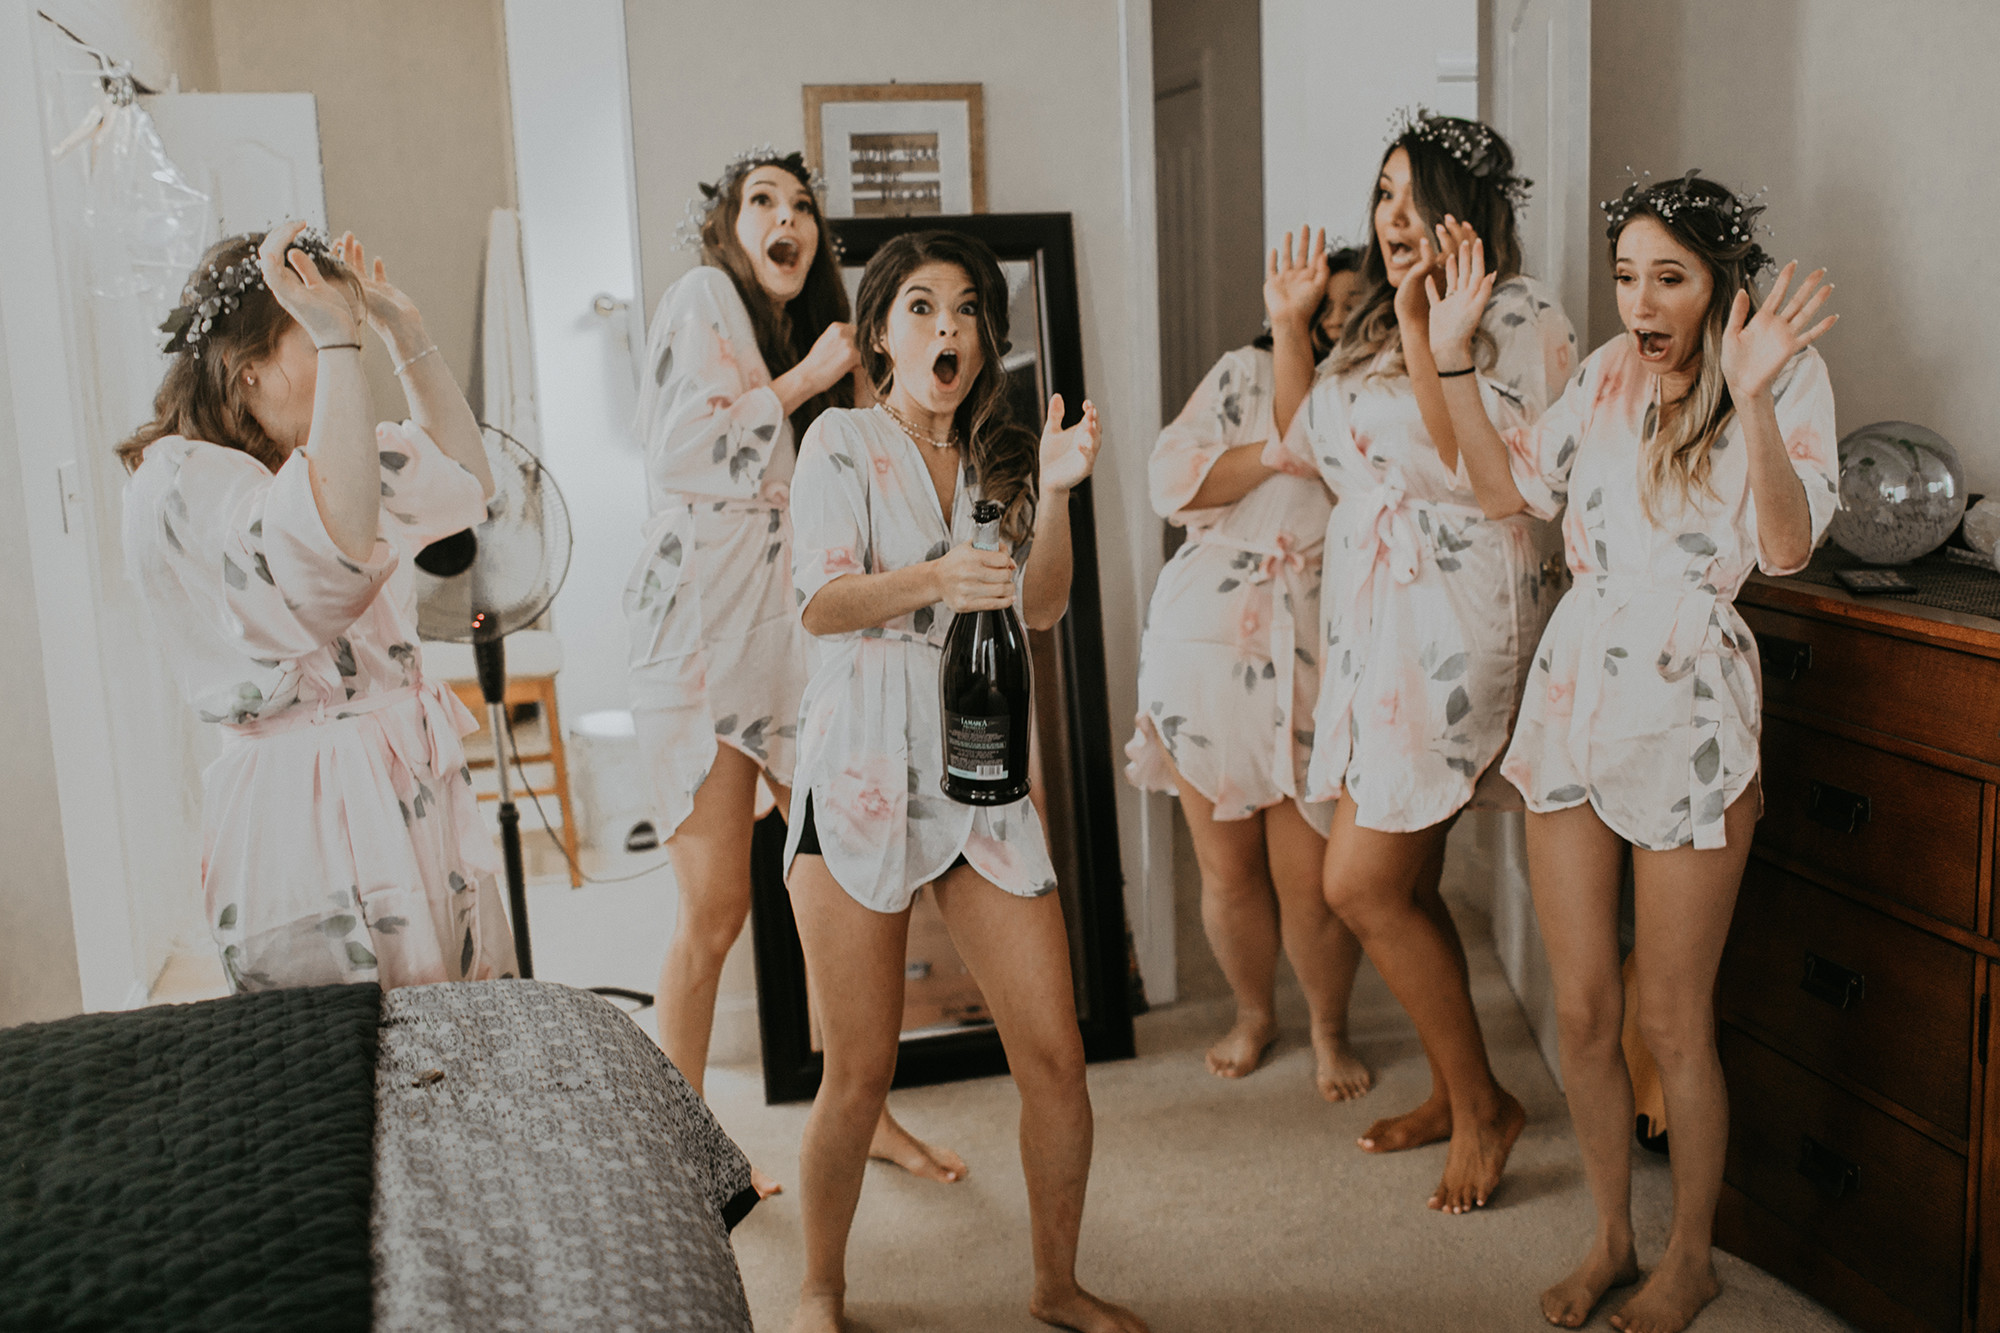 Surprise Bachelorette Party Ideas
 Champagne Pop Surprise [Rf of the Day]